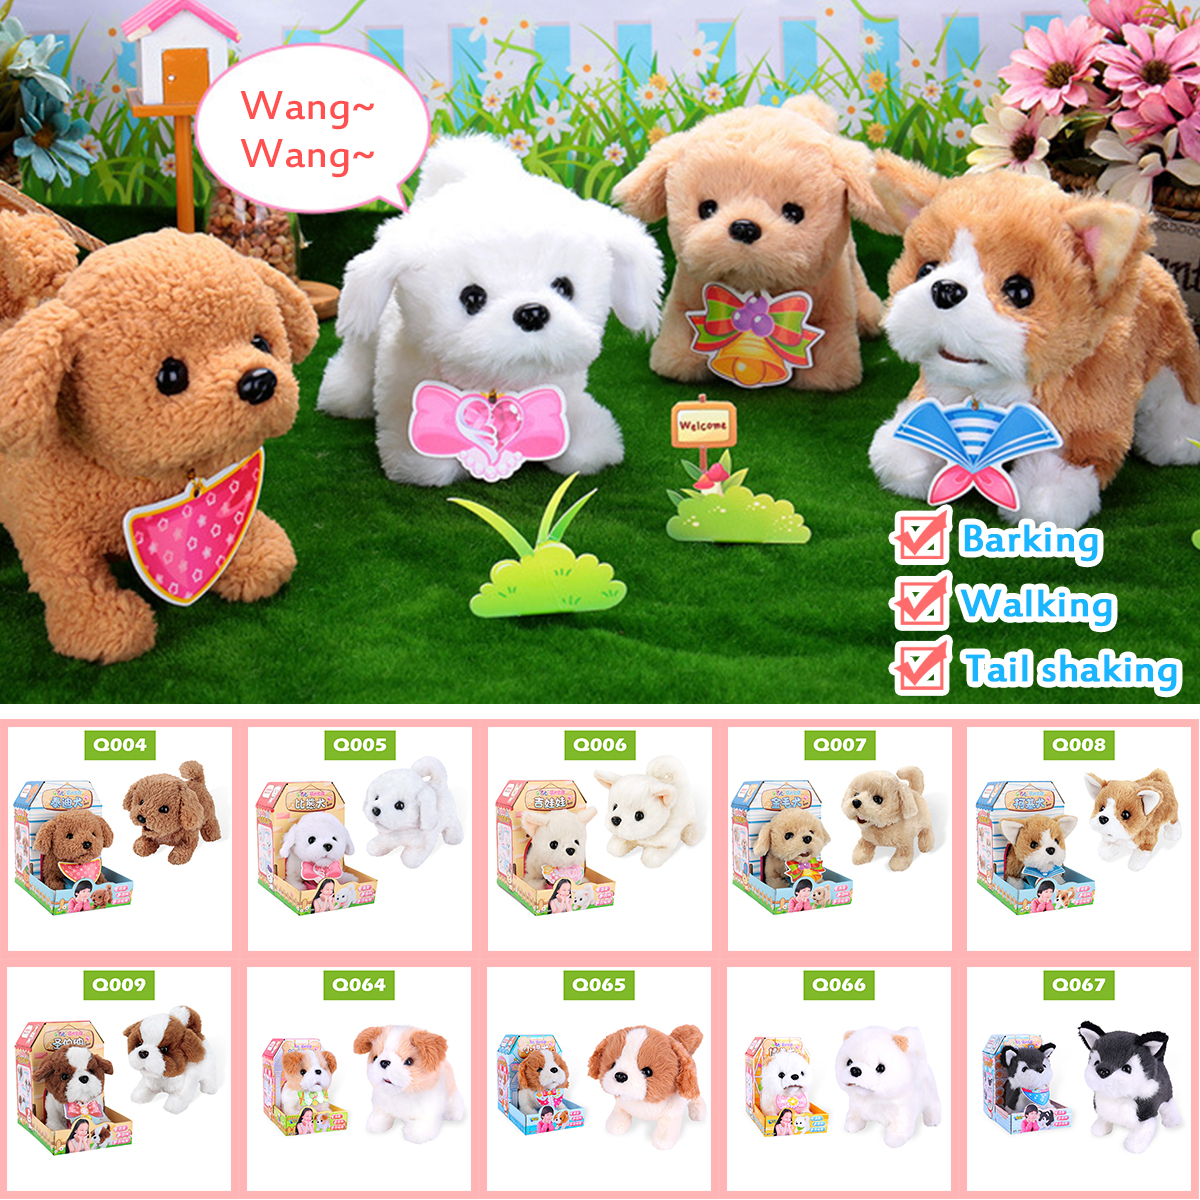 Cute-Electronic-Plush-Stuffed-Walking-Tail-Shaking-Barking-Pet-Dog-Toy-for-Kids-Developmental-1707046-2